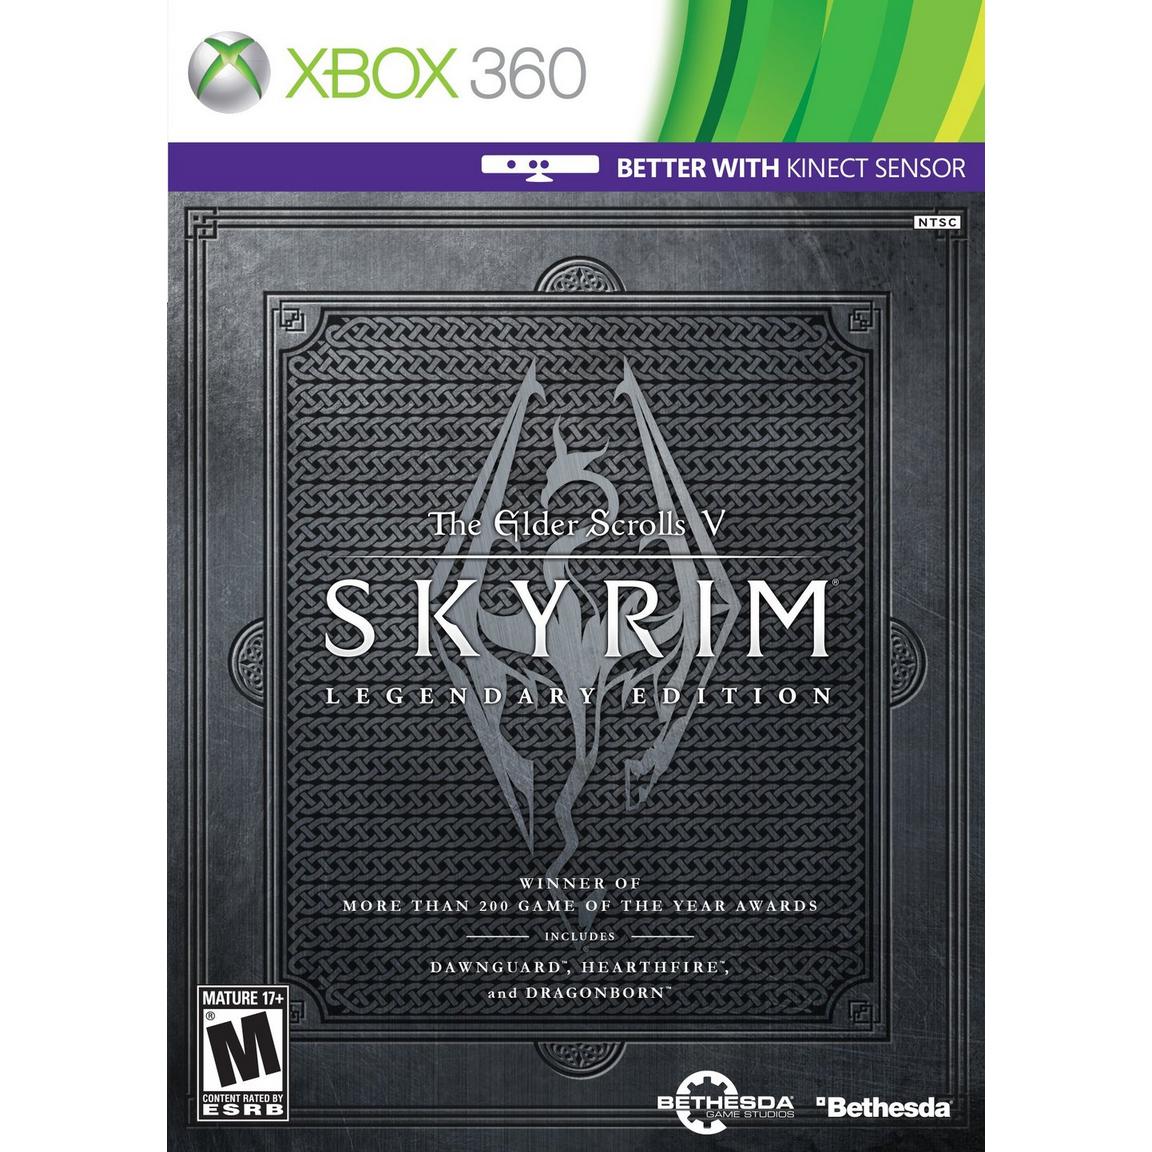 The Elder Scrolls V Skyrim Legendary Edition - Xbox 360, Pre-Owned -  Bethesda Softworks